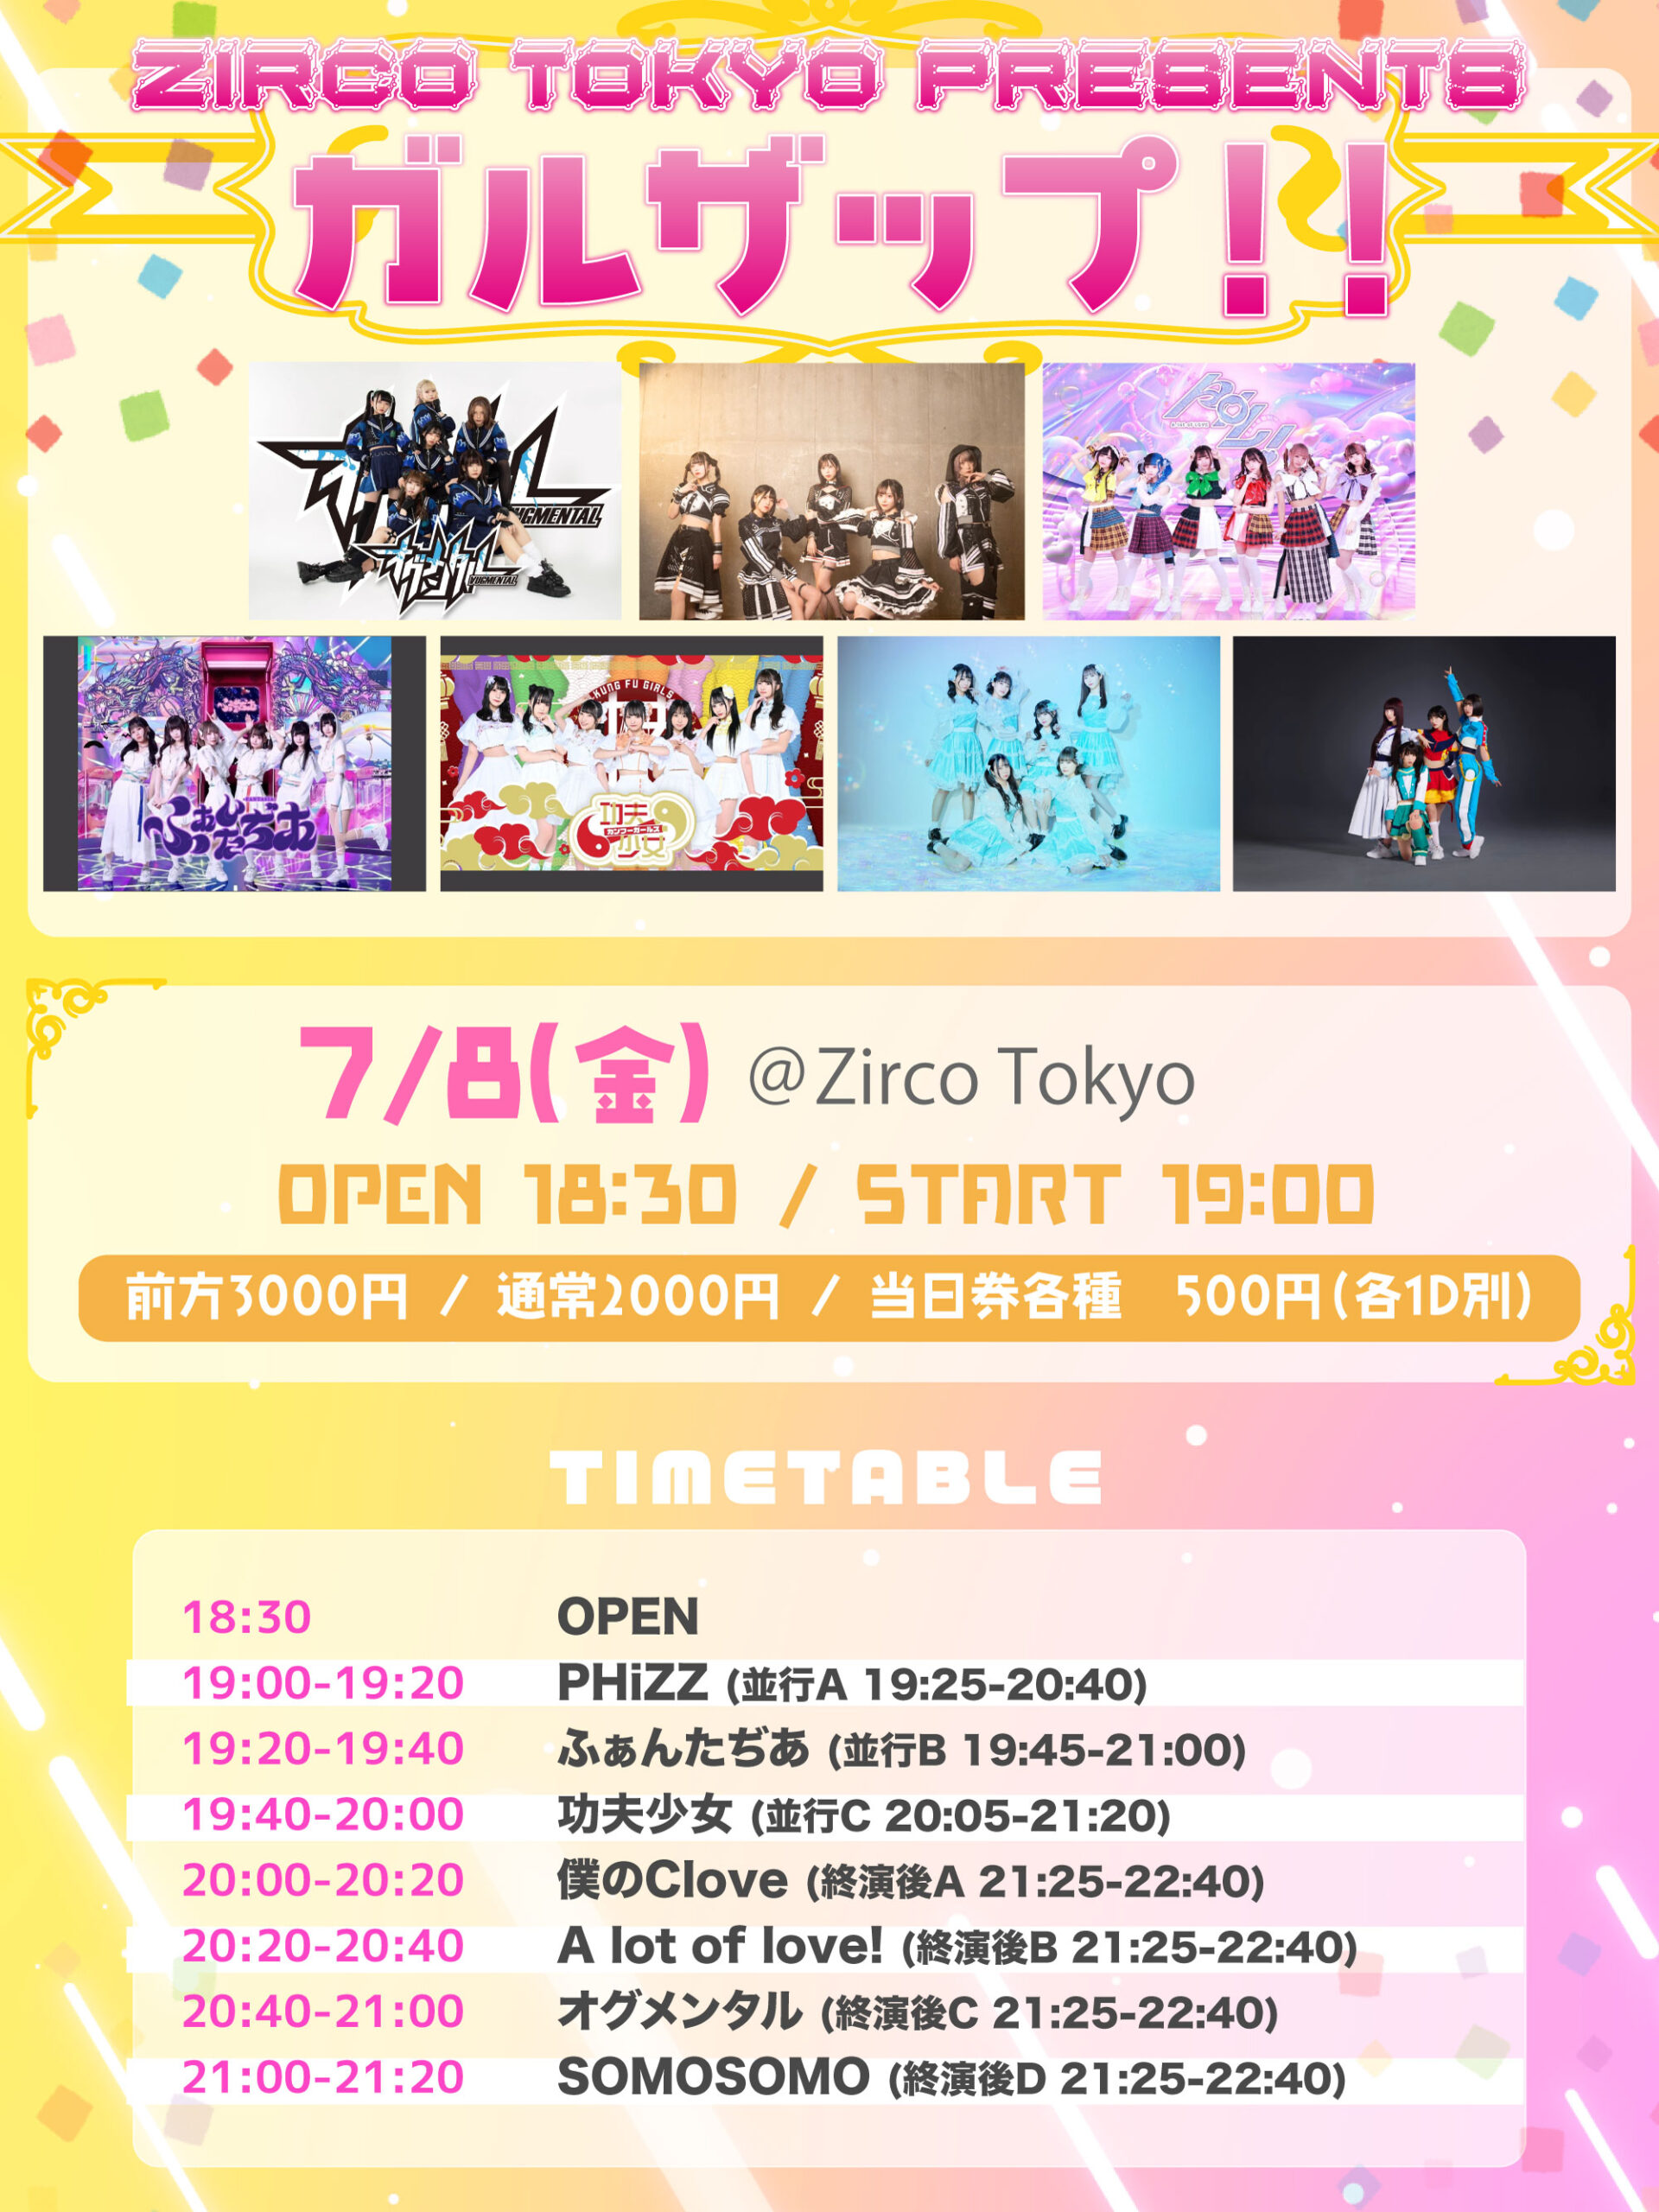 Zirco Tokyo Presents ガルザップ!!